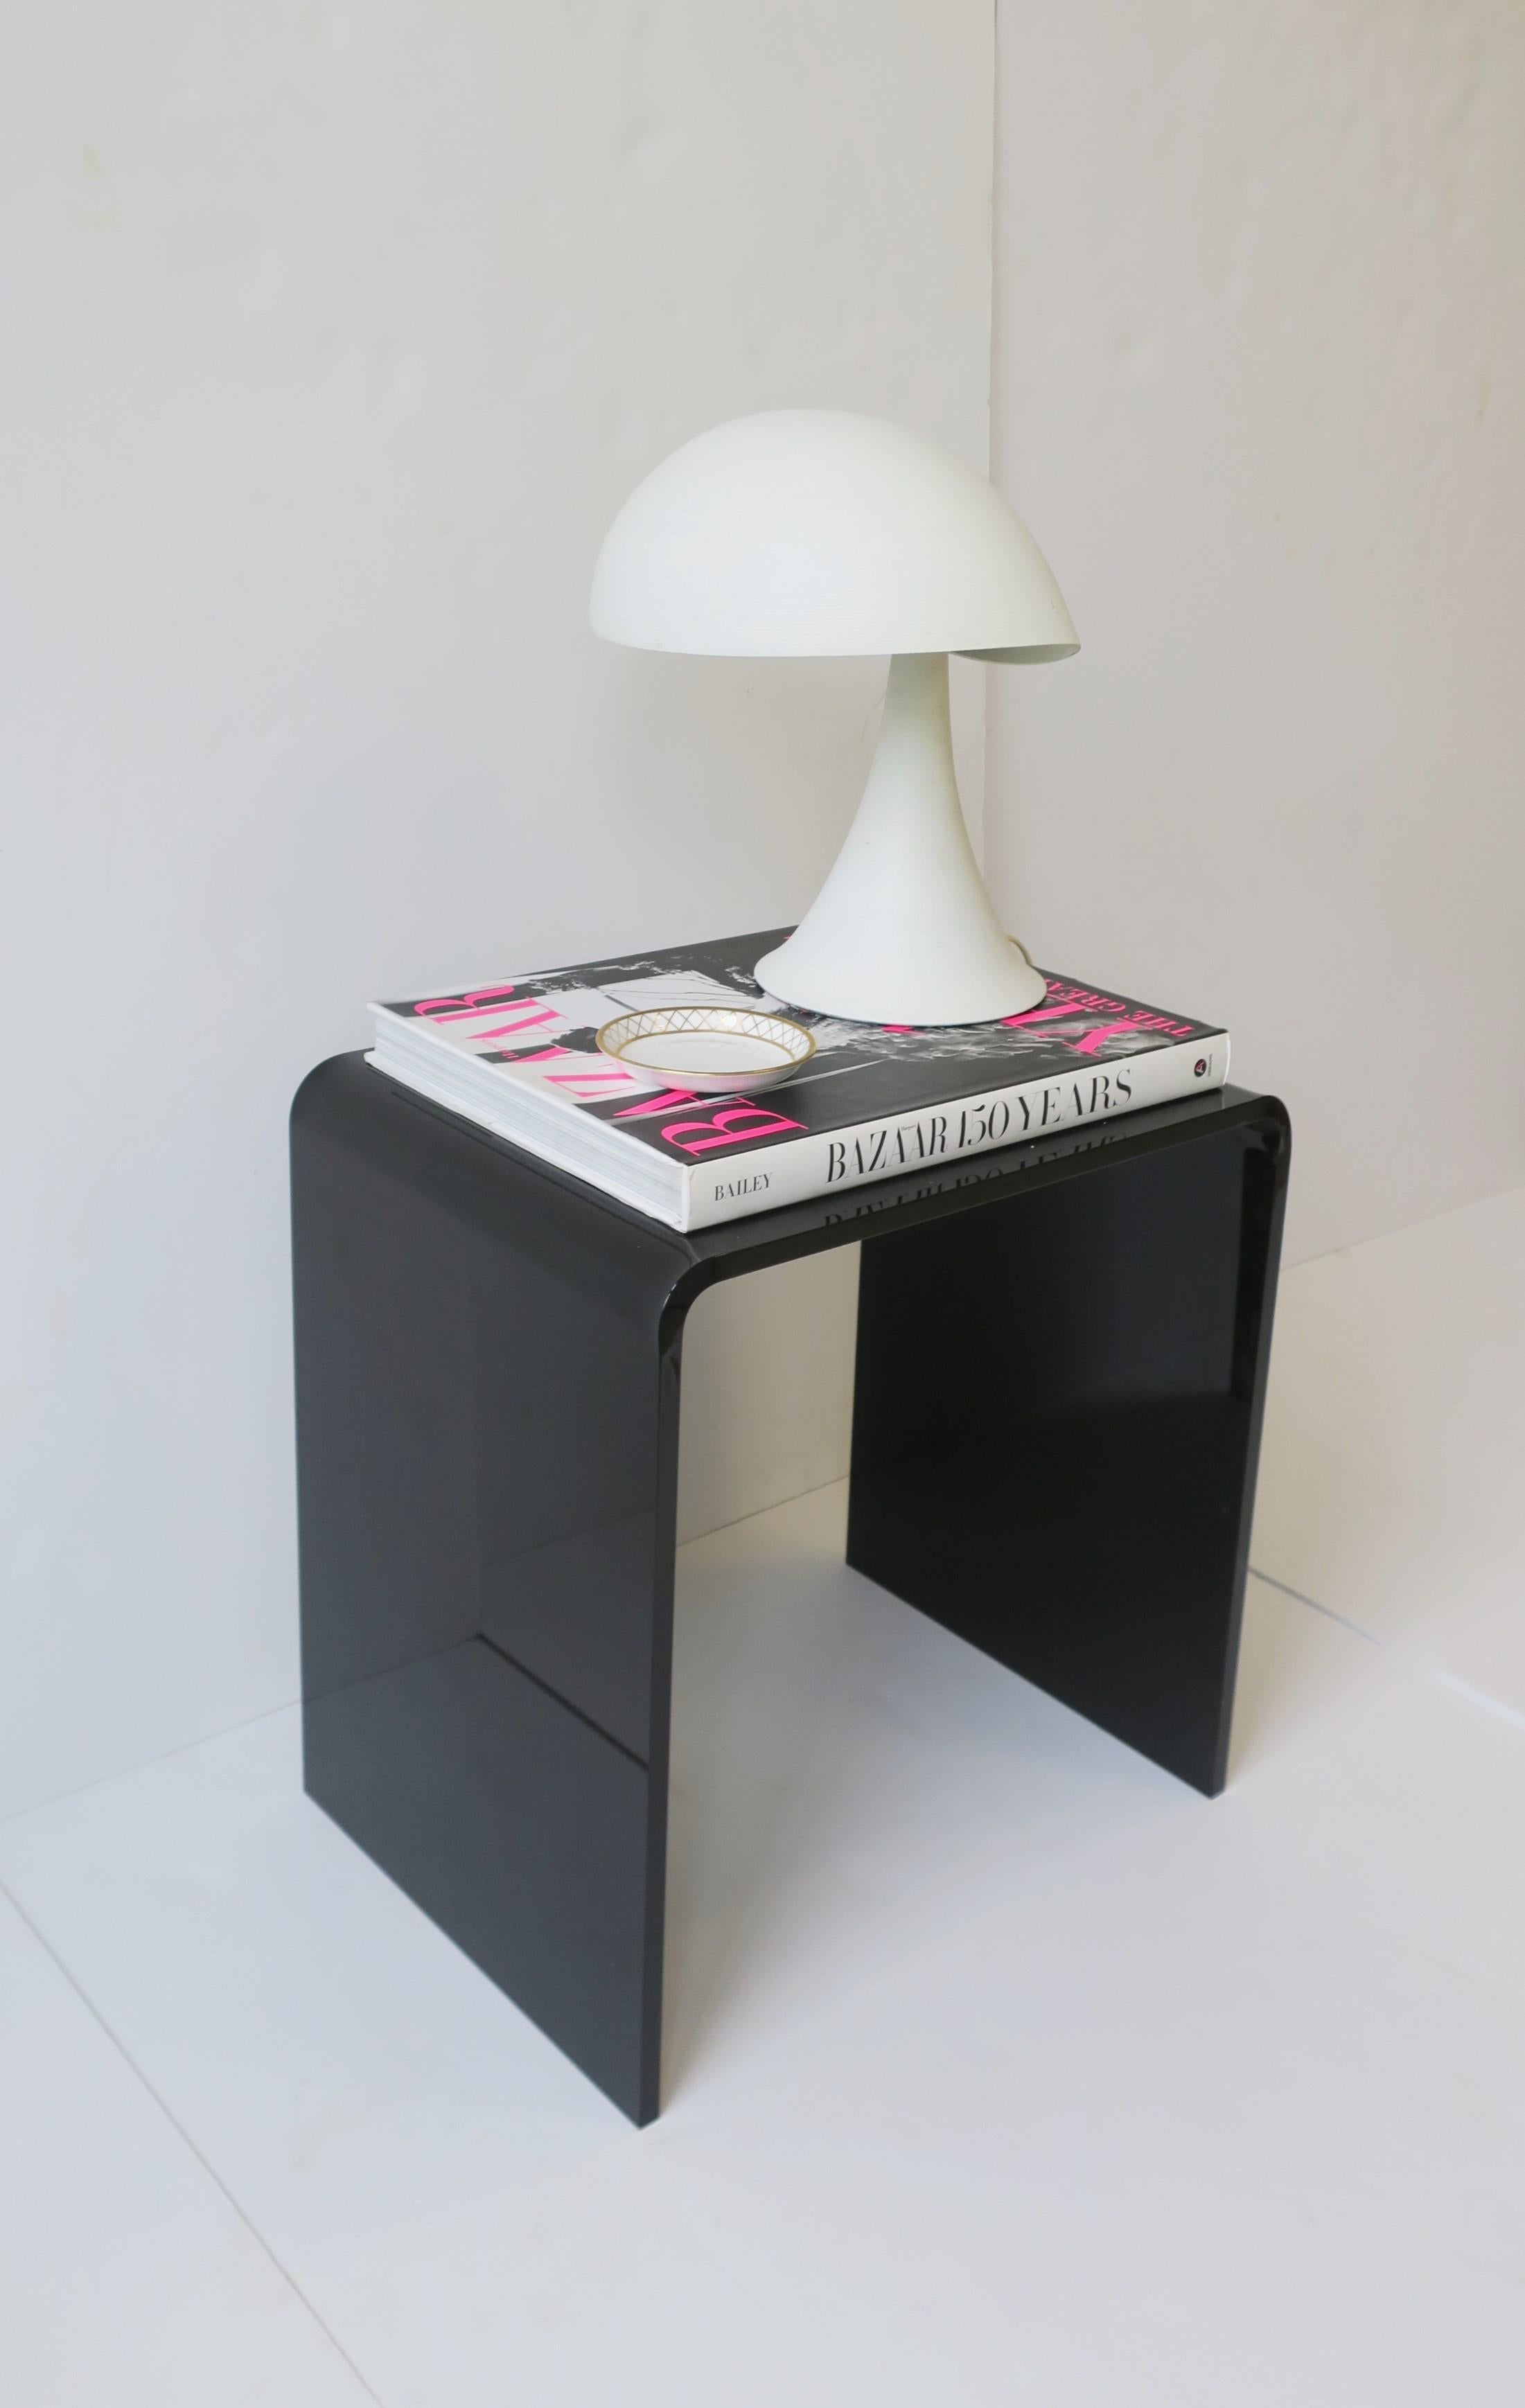 20th Century Modern White Desk or Table Lamp, ca. 1960s